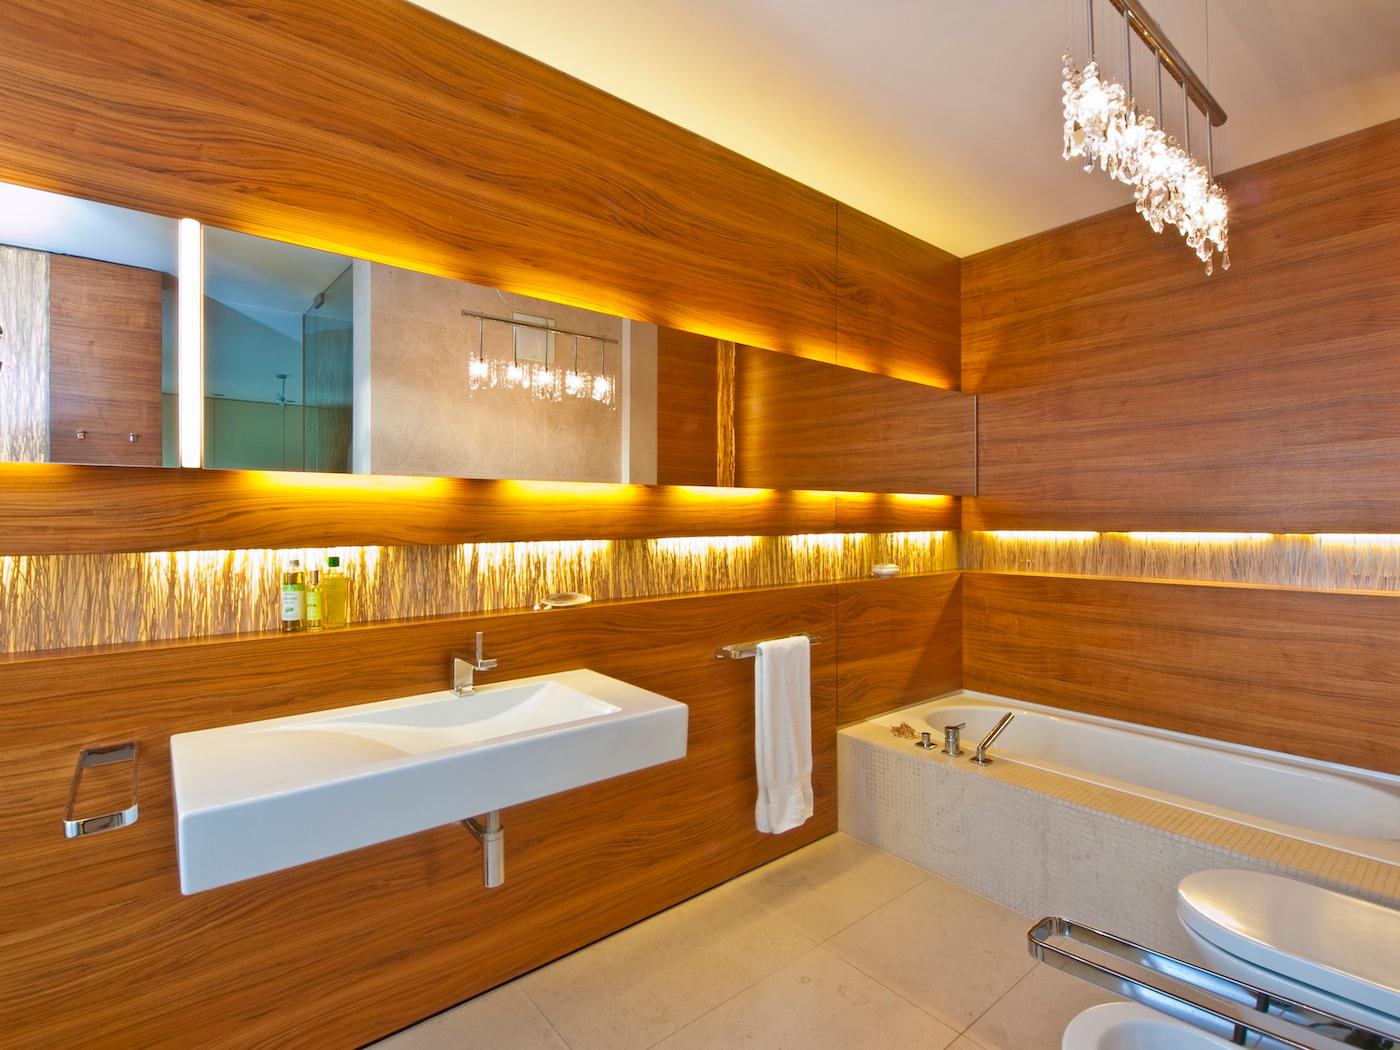 exclusives Baddesign #waschbecken #loft #indirektebeleuchtung #offenesbadezimmer ©www.peters-fotodesign.com